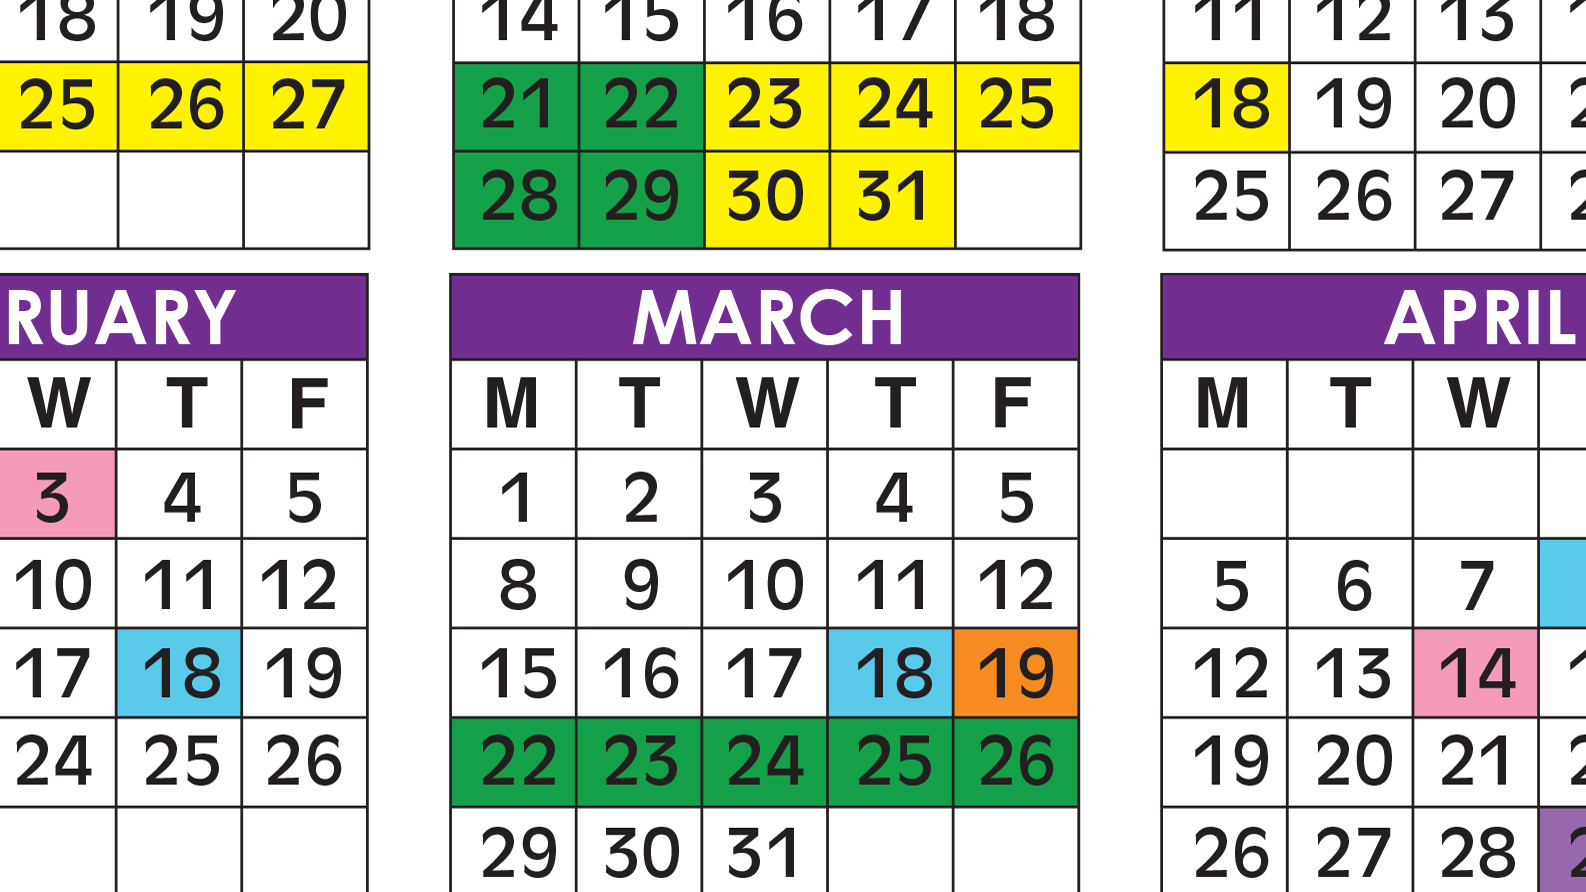 Broward County School Calendar 2021 Official 2020/21 Broward County Public Schools Color Calendar 